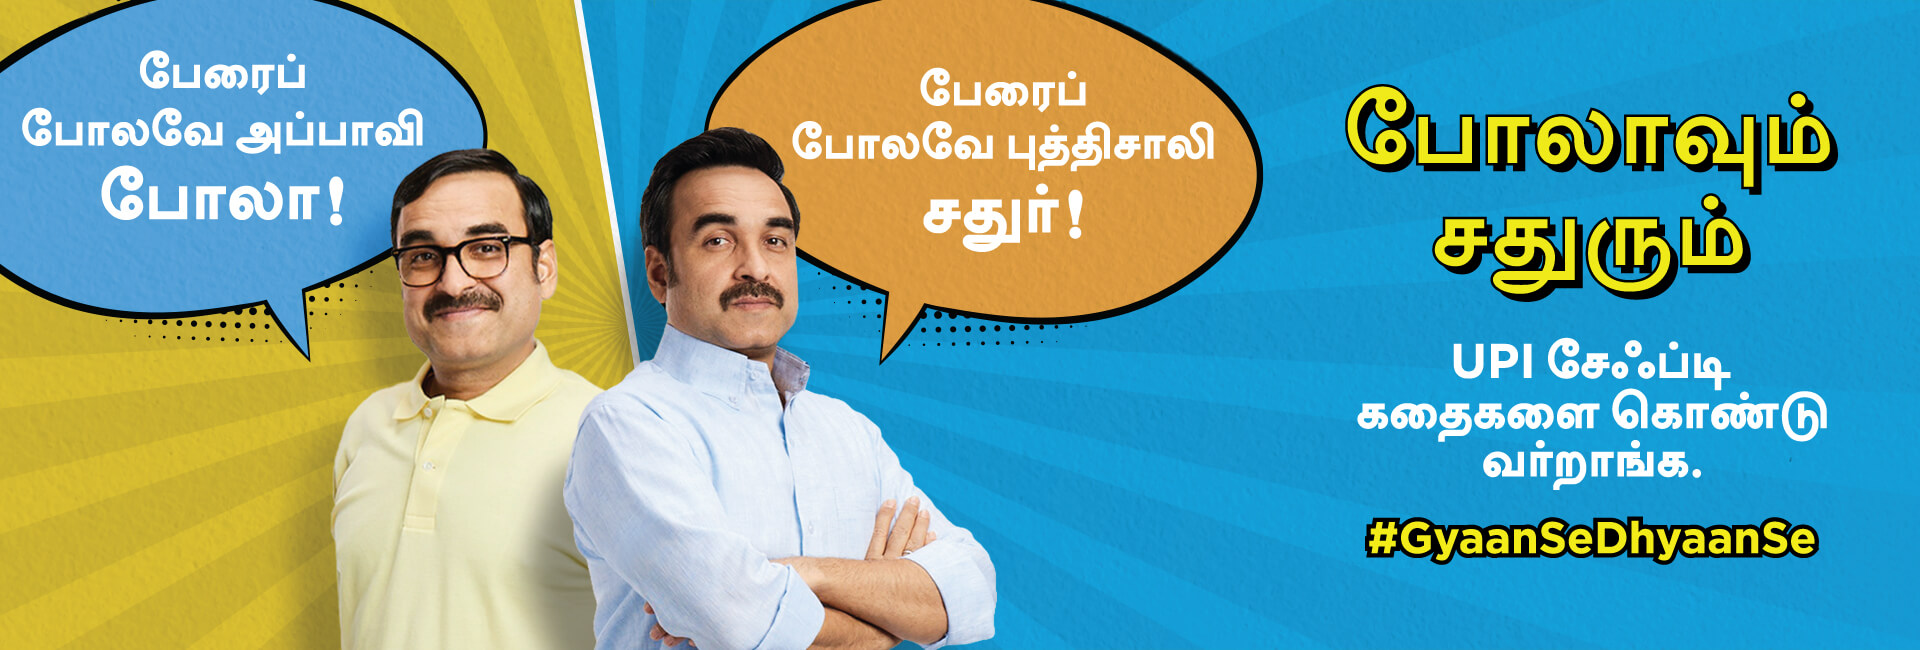 UPI Safety Campaign Tamil